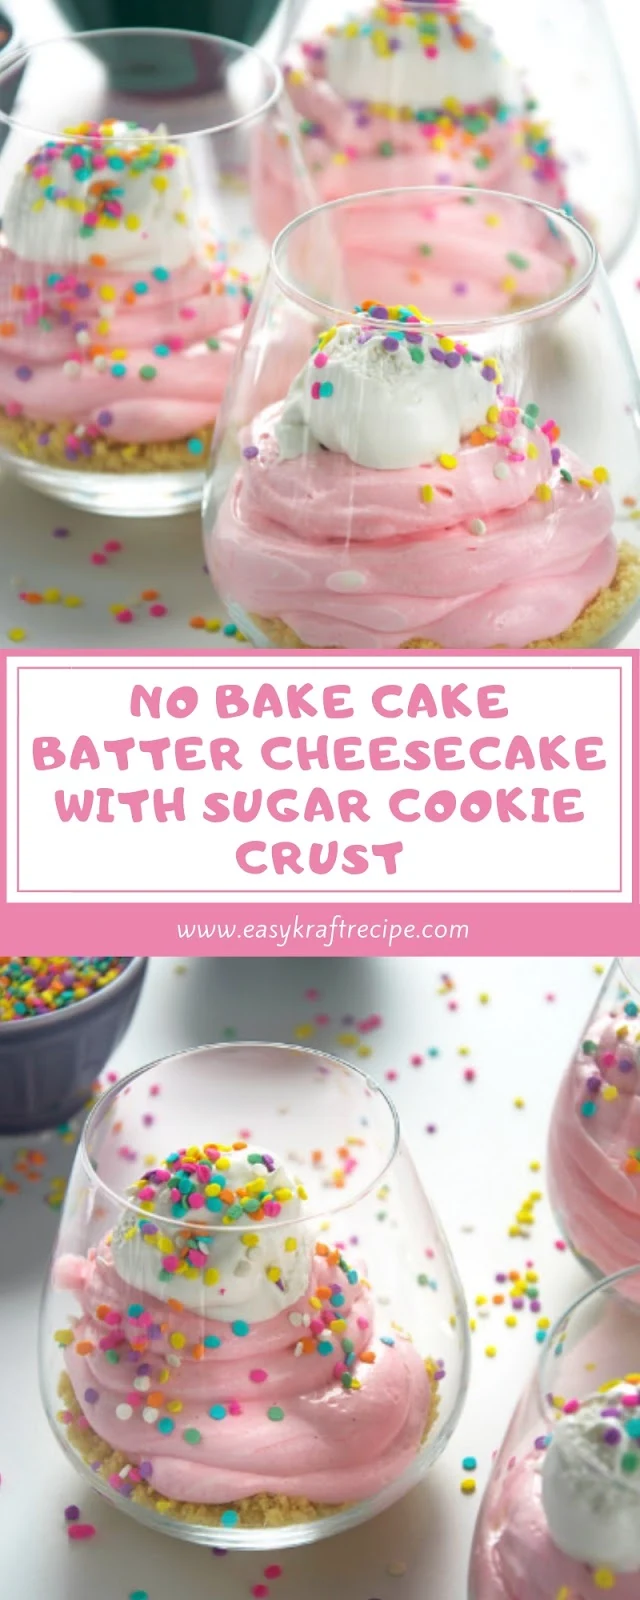 NO BAKE CAKE BATTER CHEESECAKE WITH SUGAR COOKIE CRUST